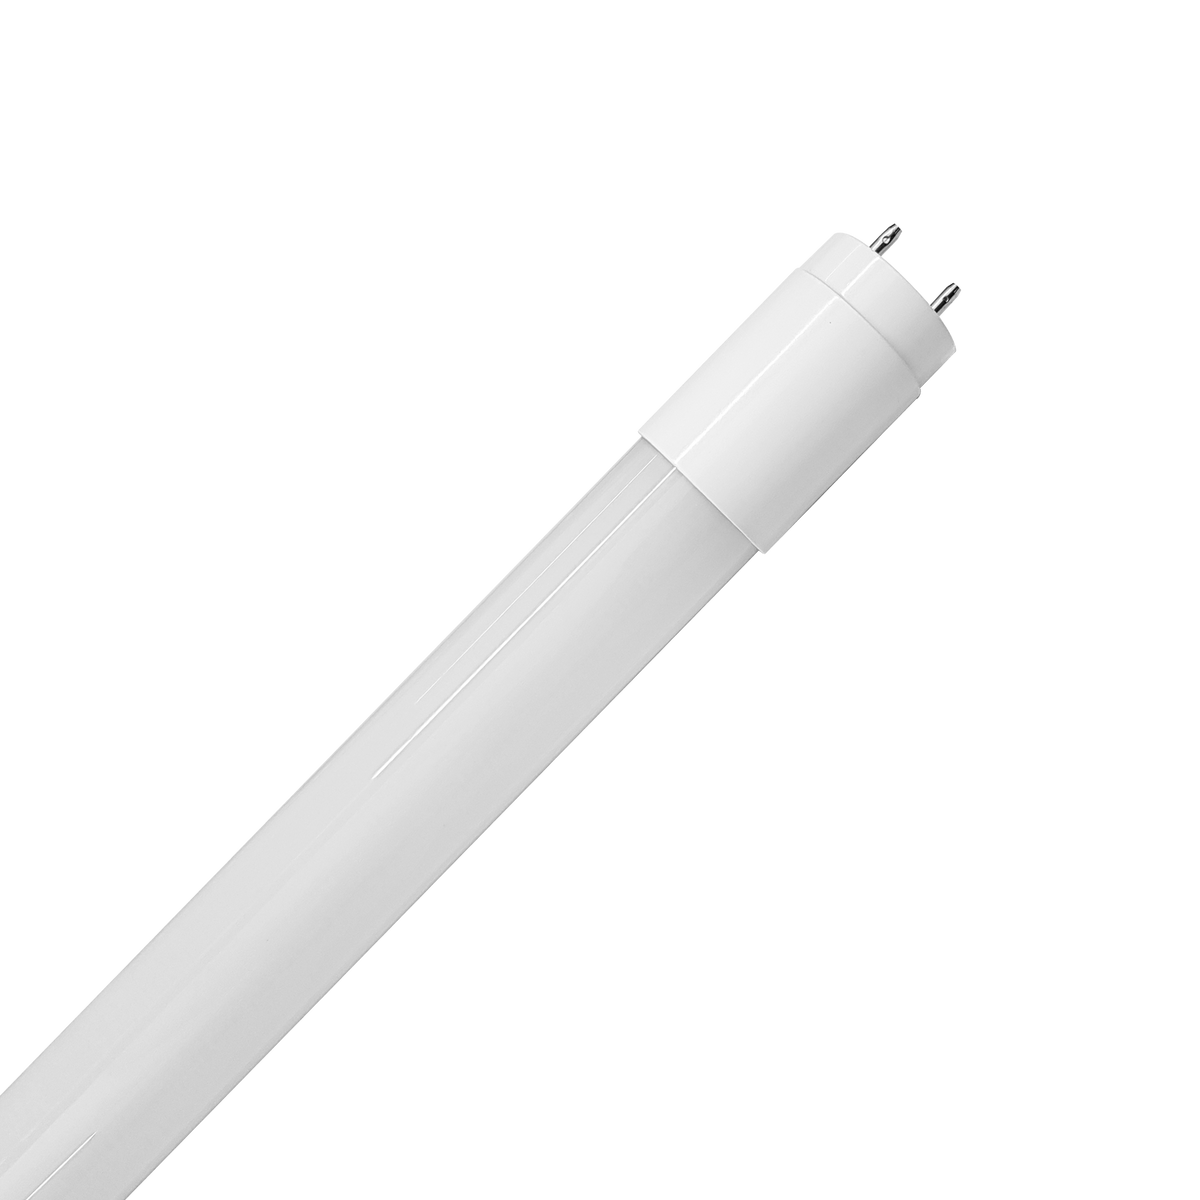 Tubo LED T8 de 4 pies, fluorescente, cubierta esmerilada, base bi-pin  mediana T8 de 14 vatios 3000K 1700 lúmenes; 25W-32W Tipo de reemplazo